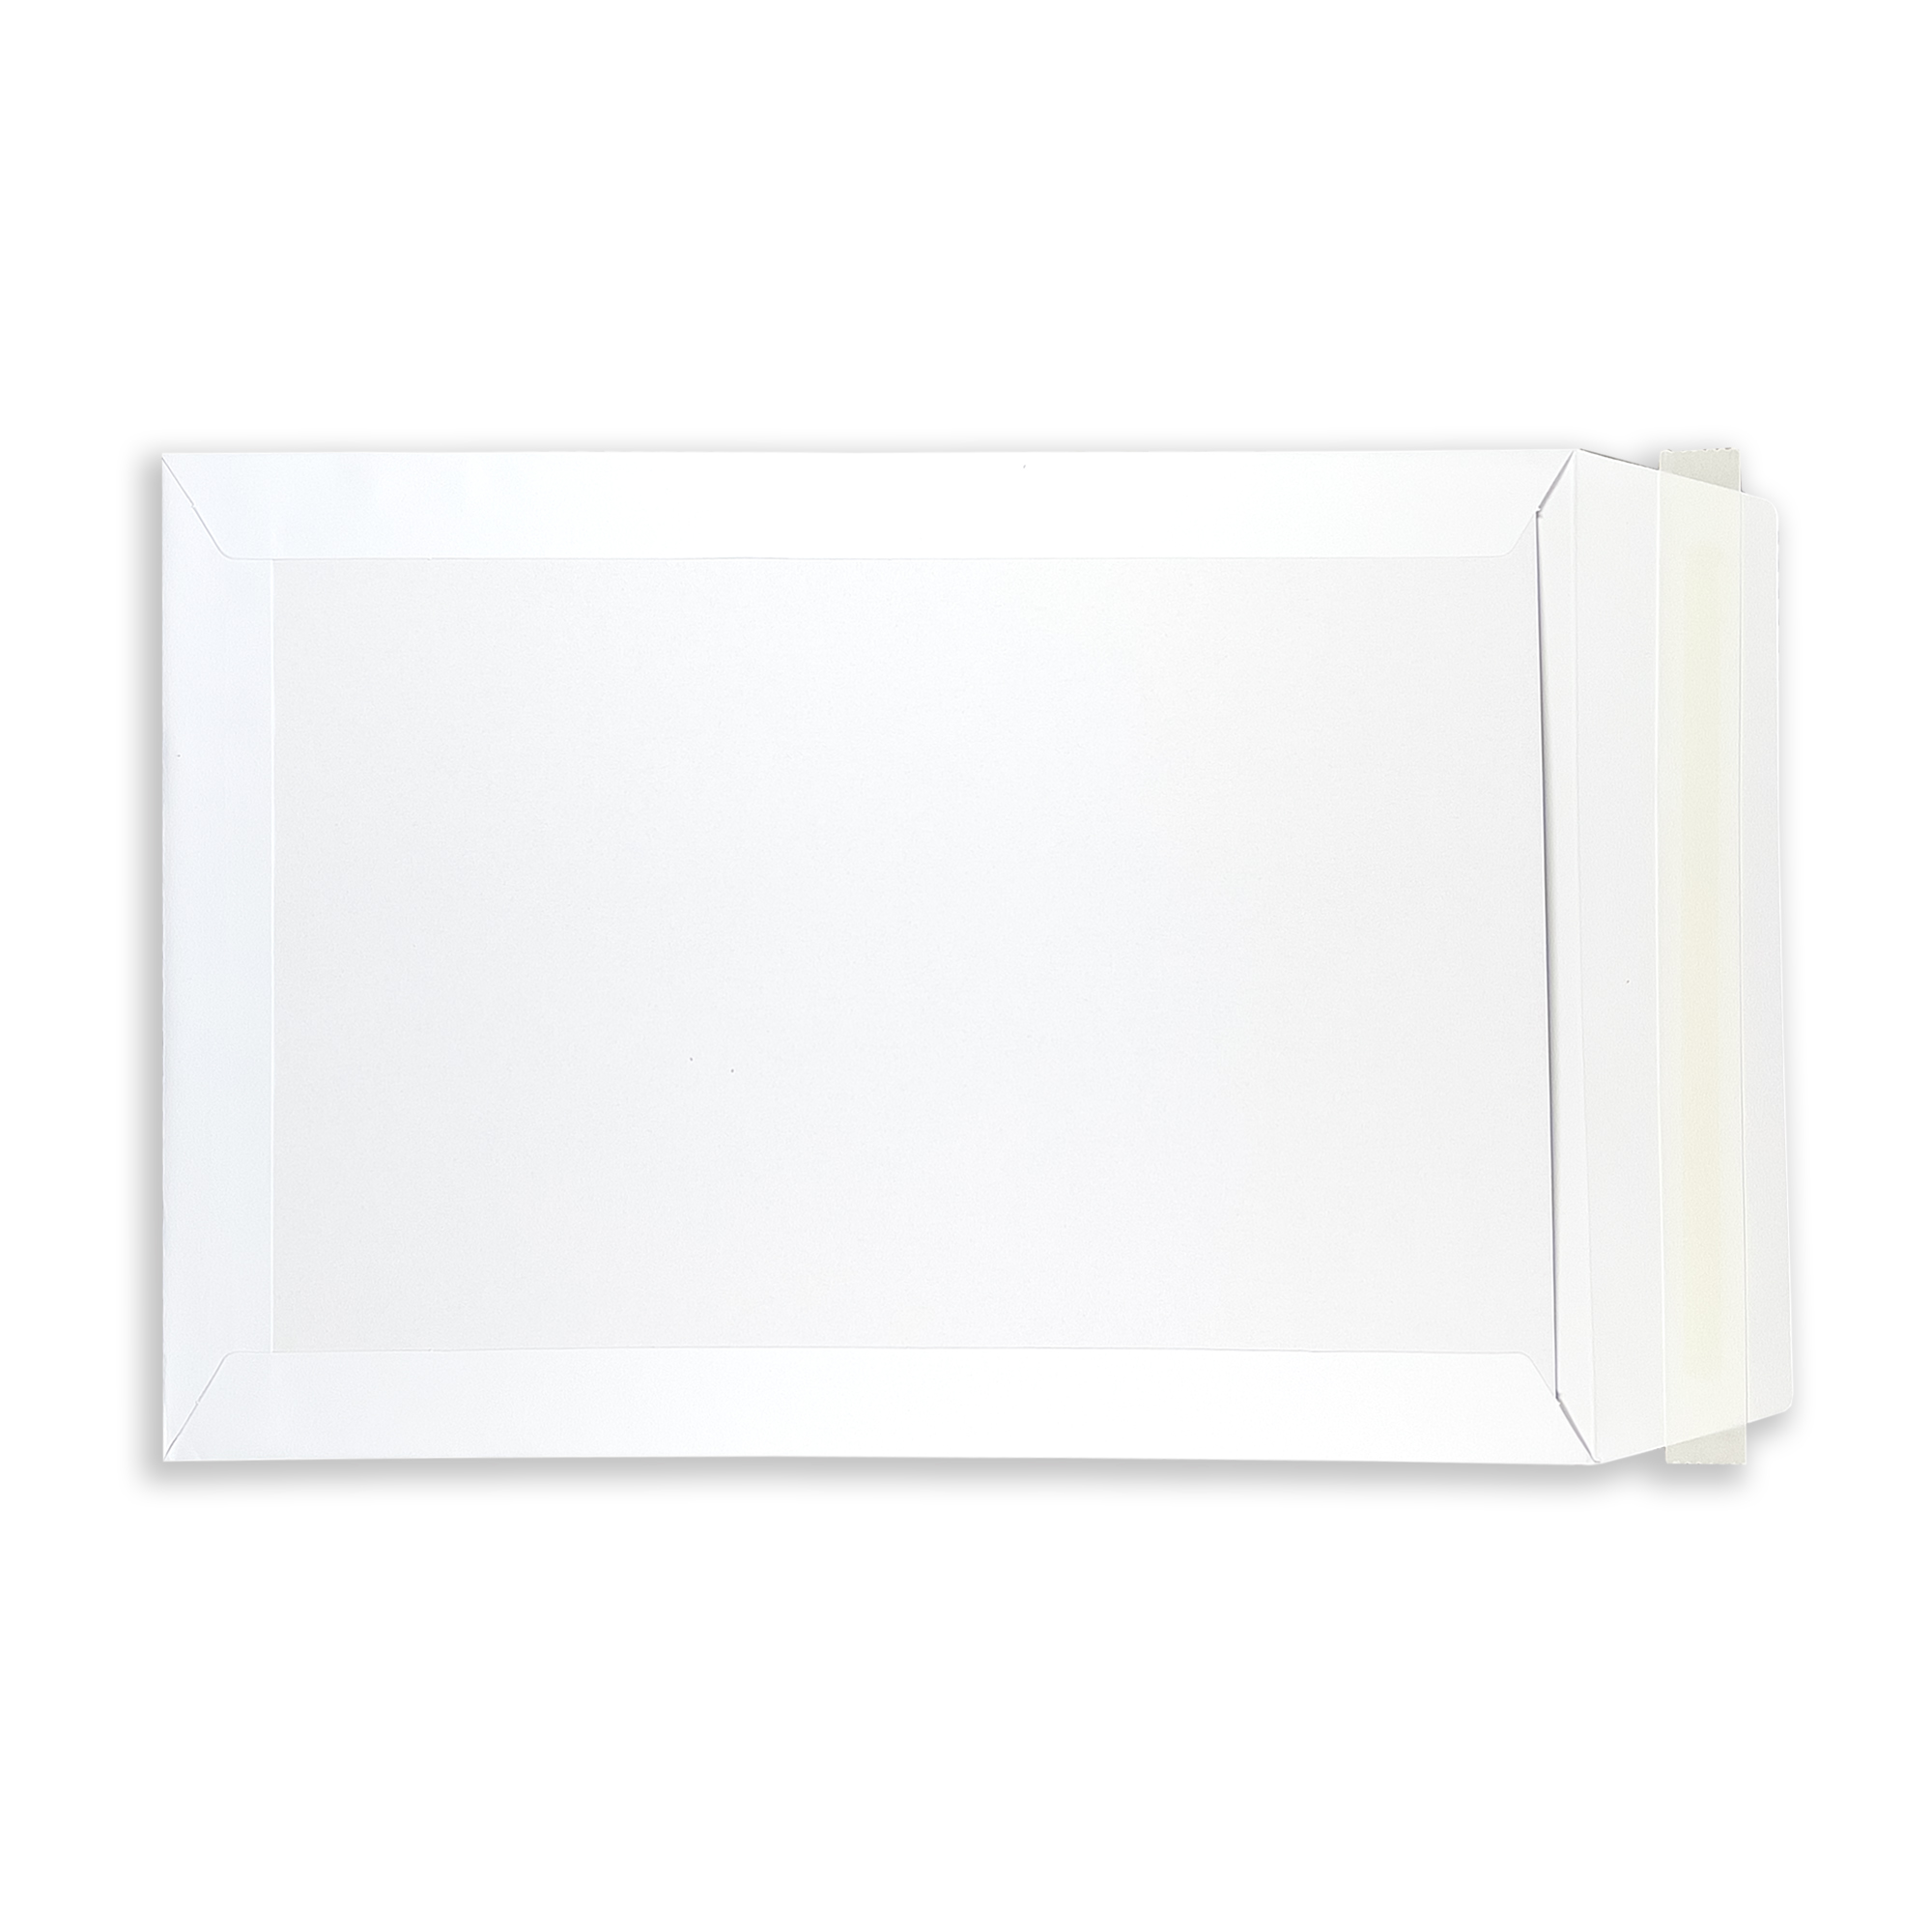 rectangle-white-board-back-window-pocket-envelopes-flaps-open